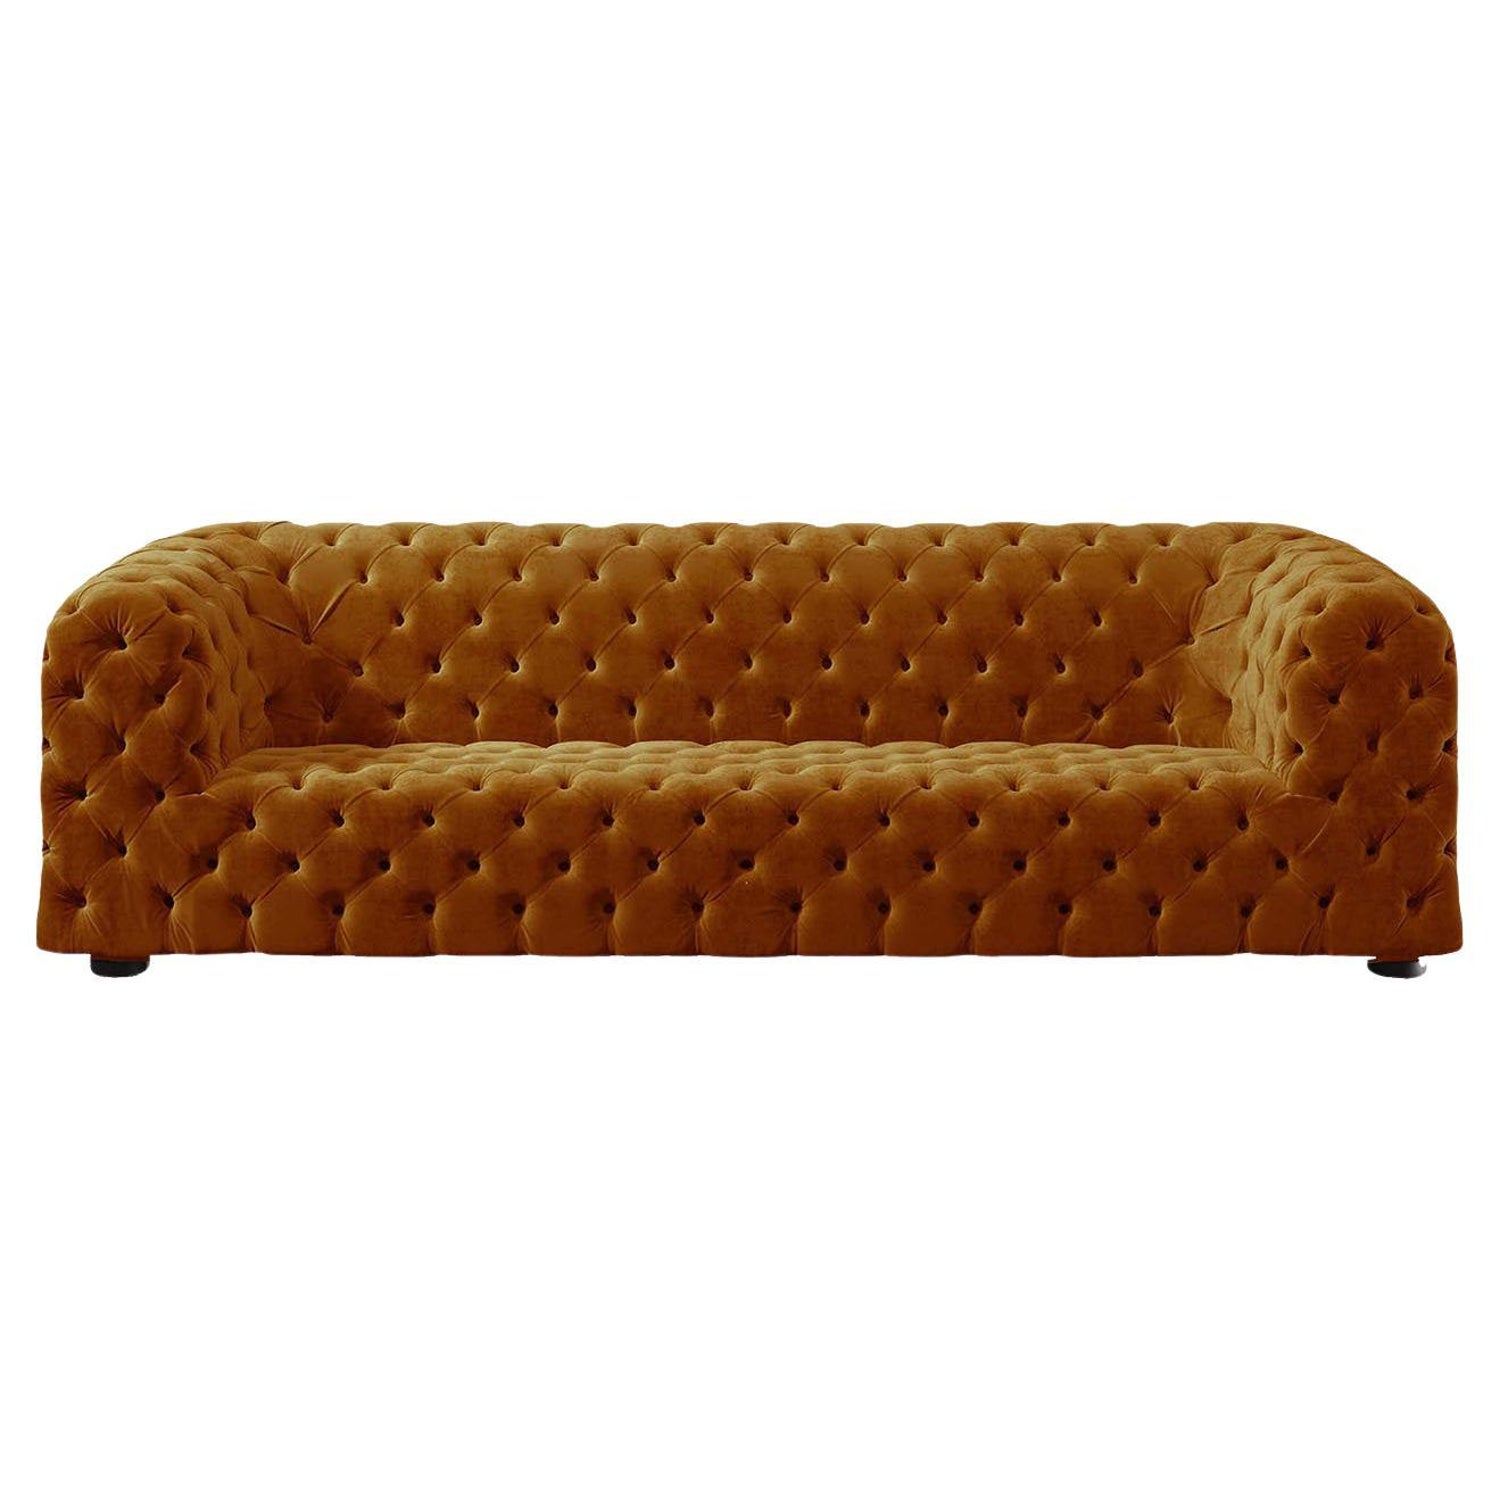 Mustard Sofa - 11 For Sale on 1stDibs | mustard sofas for sale, mustard sofa  chair, mustard sectional sofa